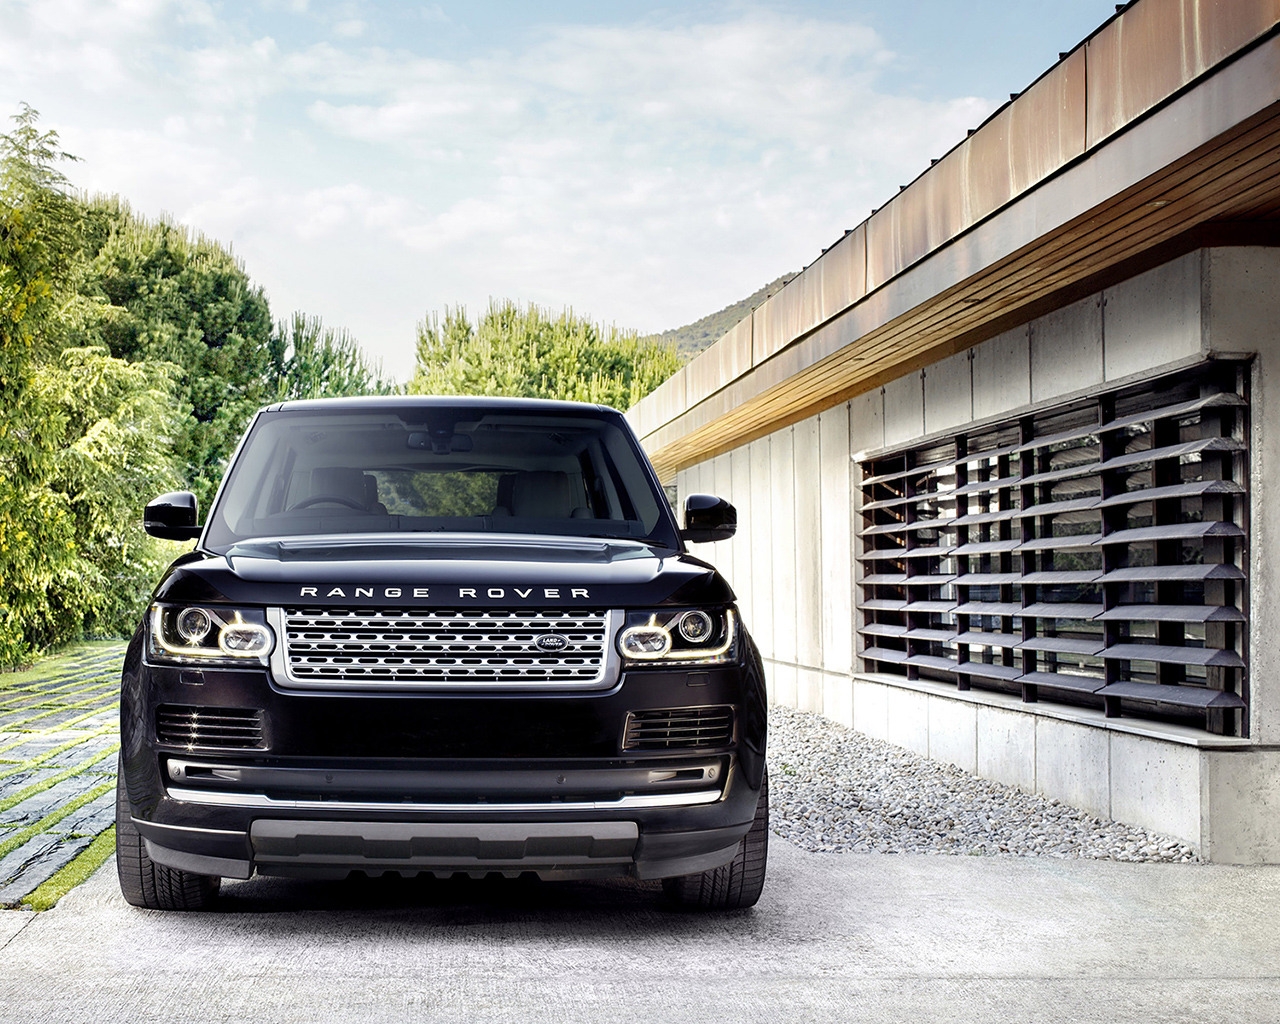 Gorgeous Black Range Rover for 1280 x 1024 resolution